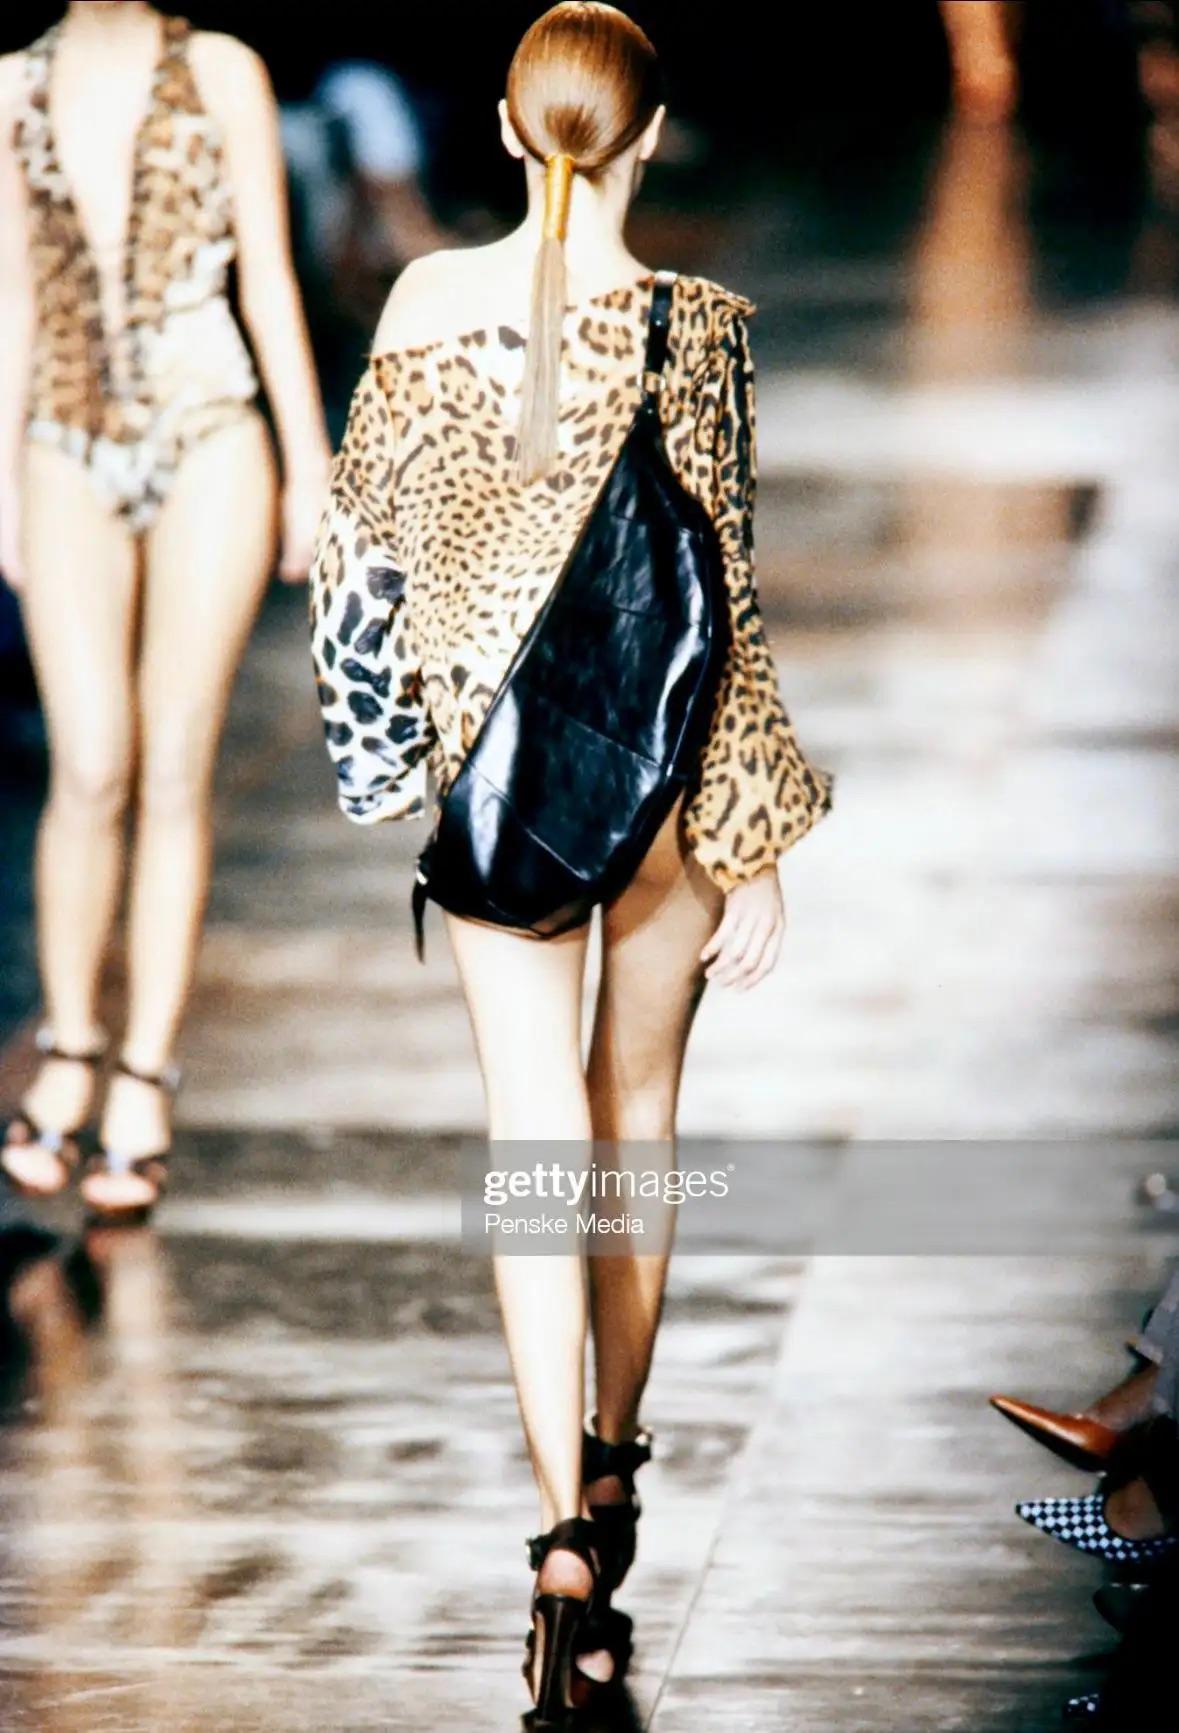 S/S 2002 Yves Saint Laurent by Tom Ford Safari Cheetah Print Sheer Silk Top For Sale 4